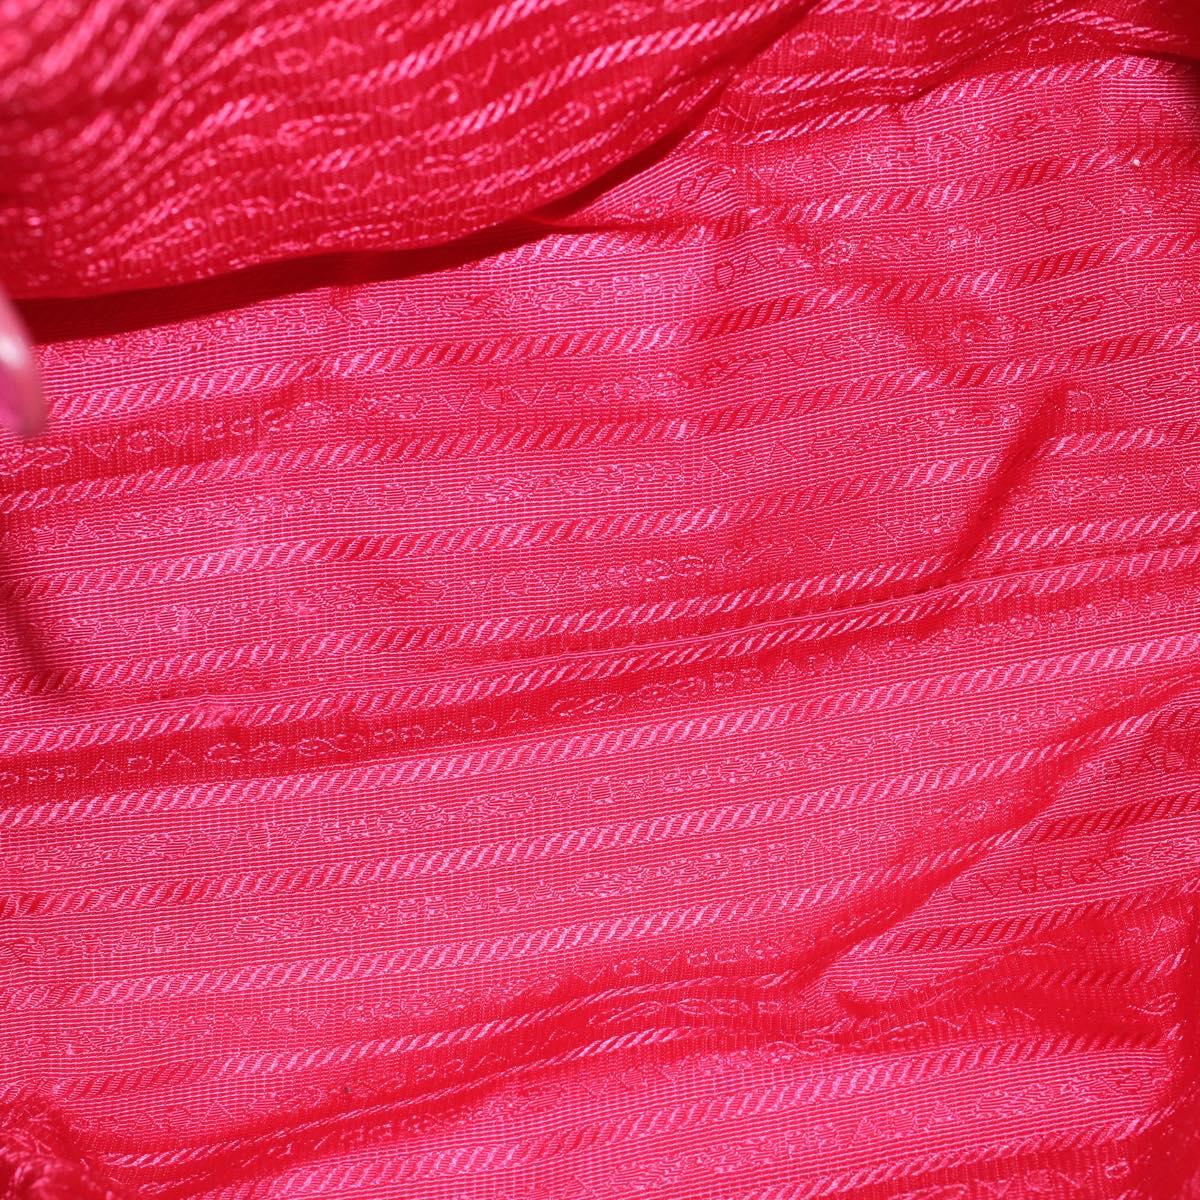 PRADA Hand Bag Nylon Pink Auth 60248